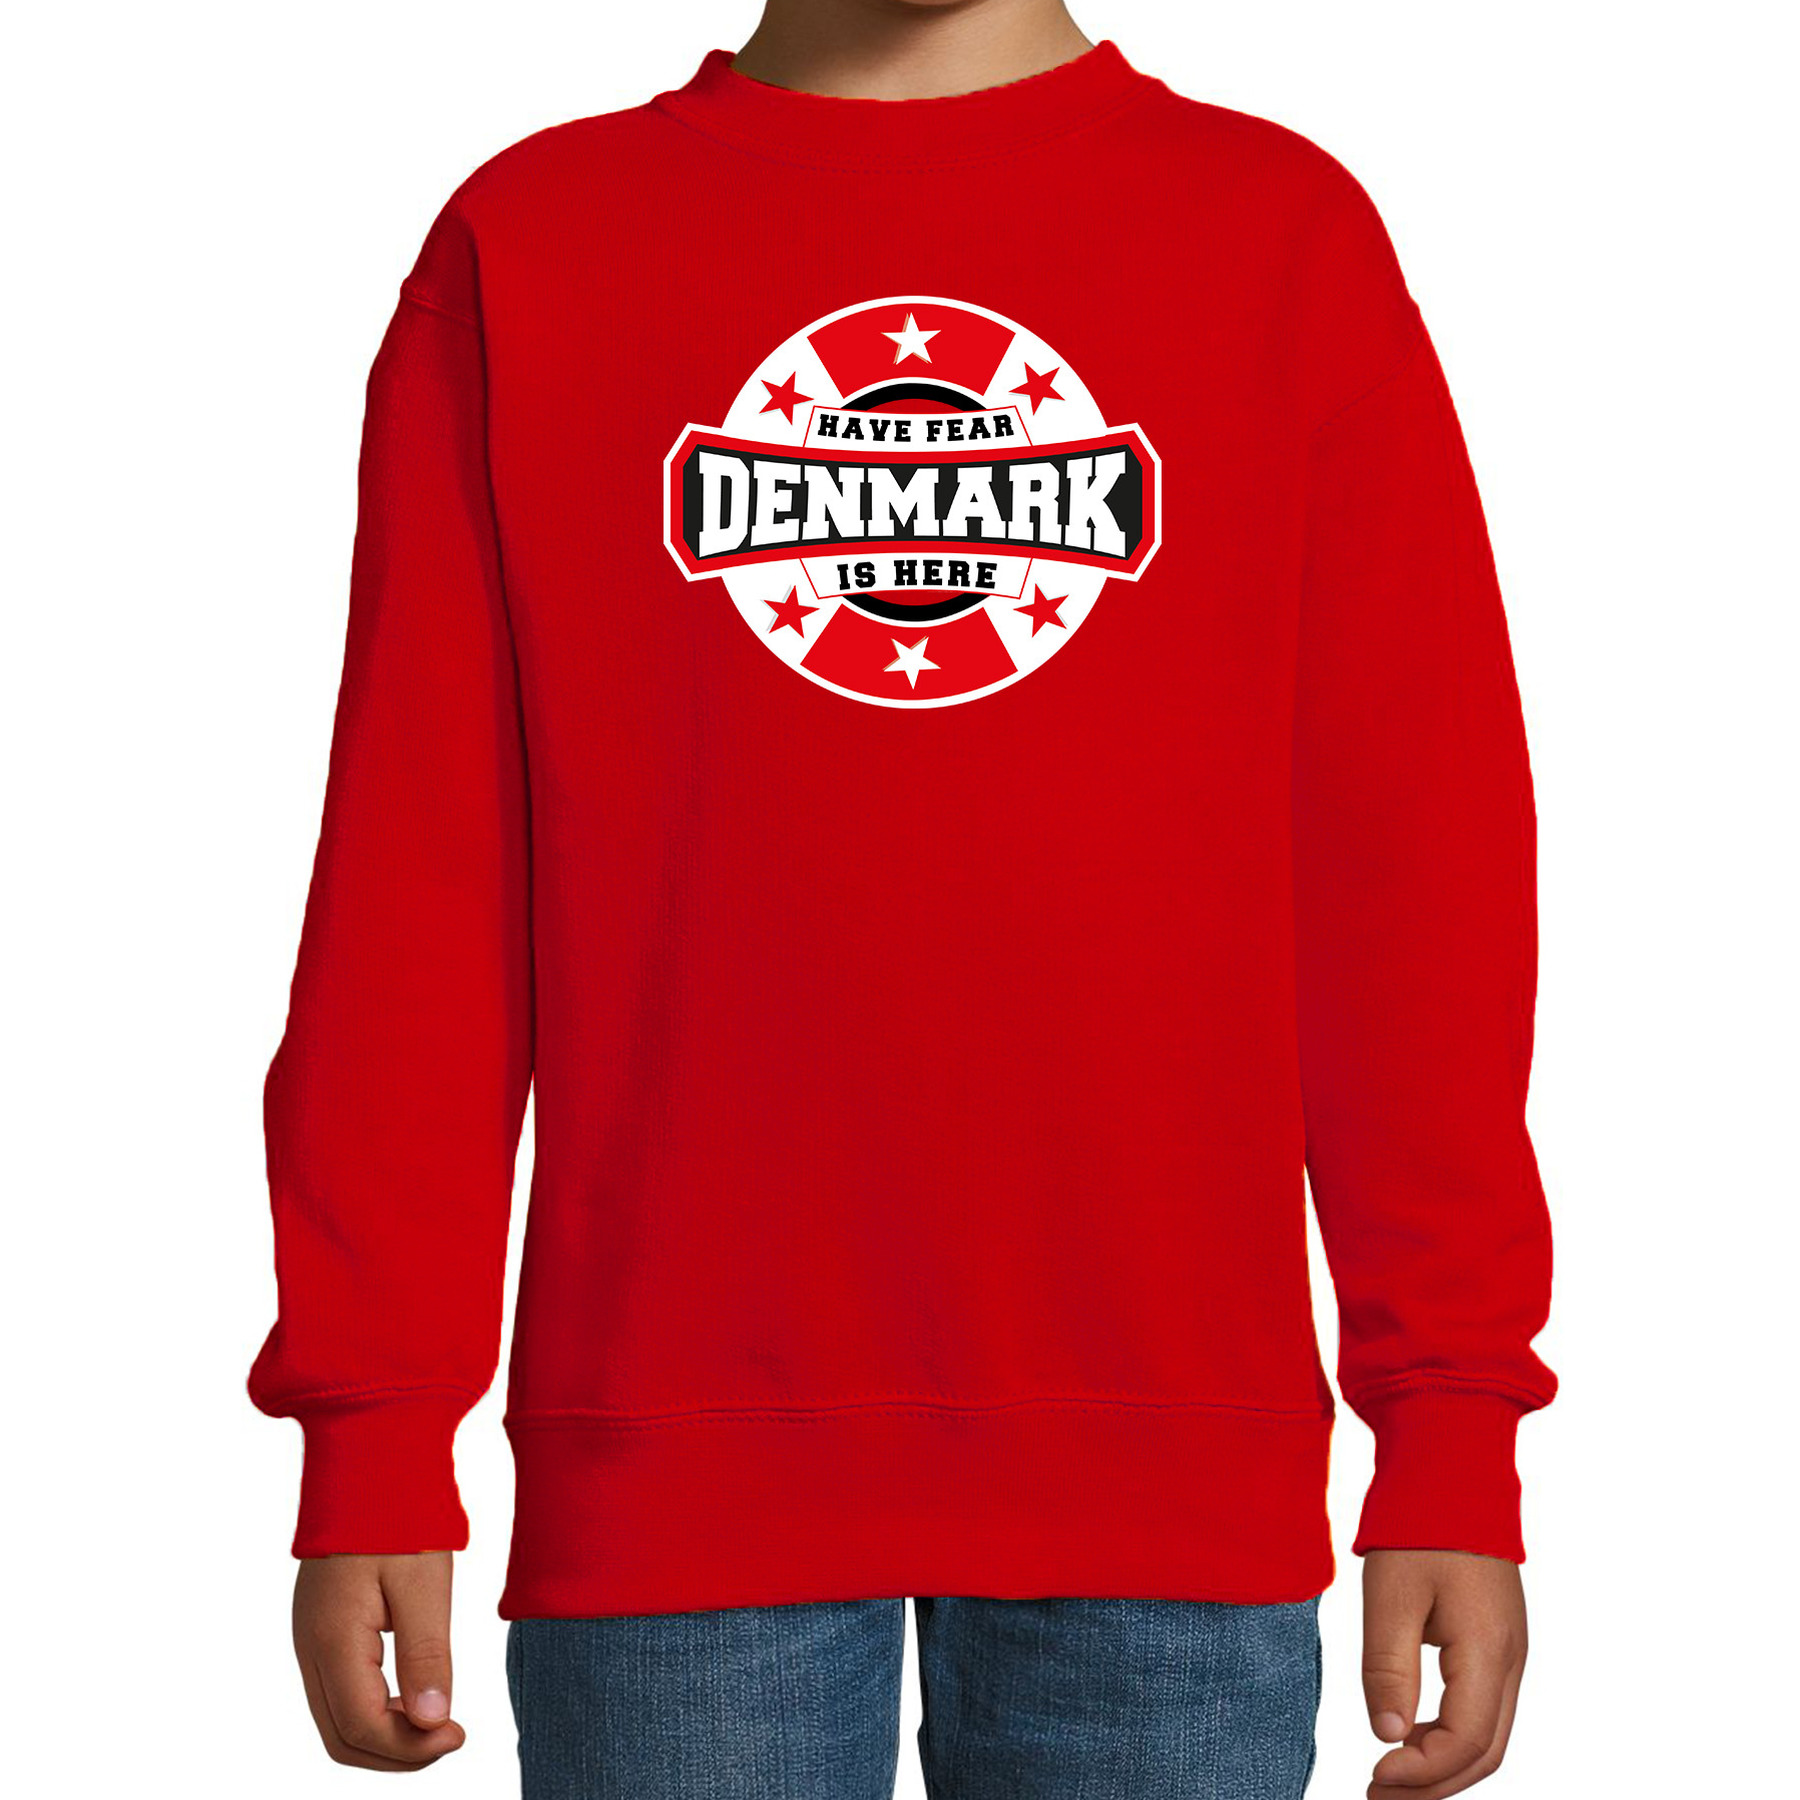 Have fear Denmark is here-Denemarken supporter sweater rood voor kids